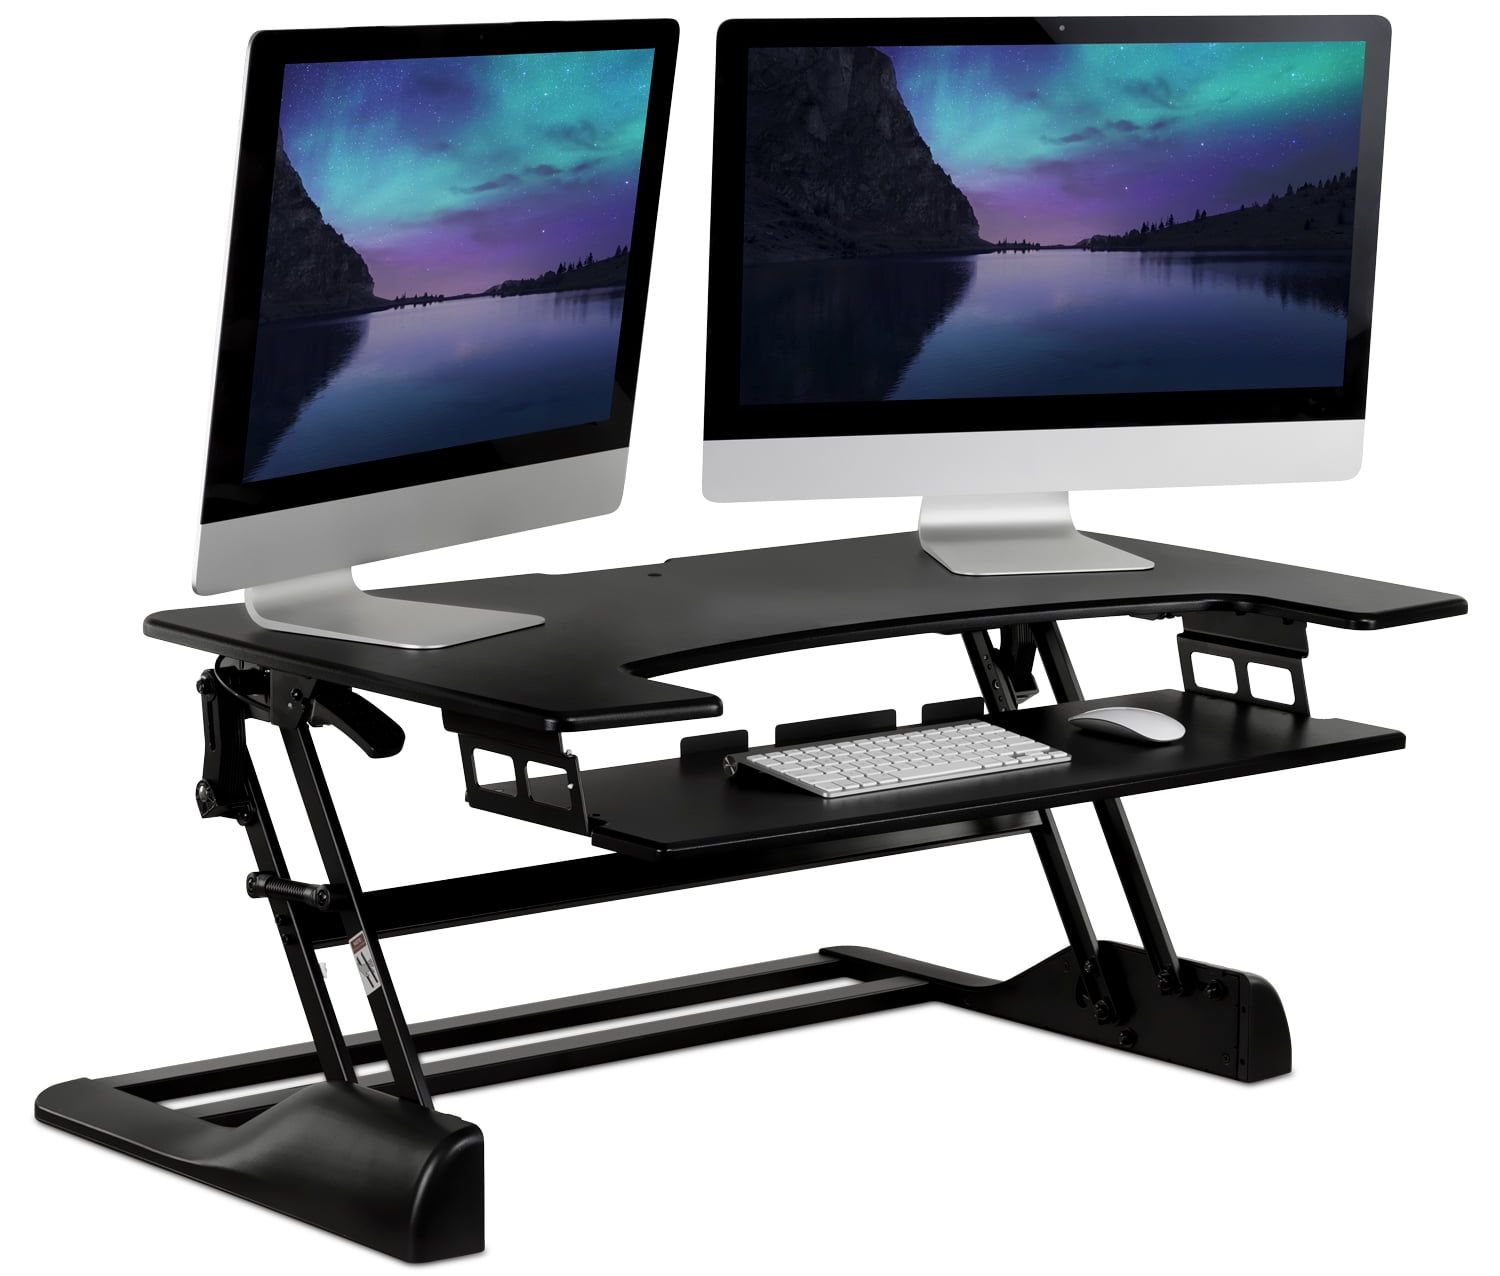 piotrowski height adjustable standing desk converter